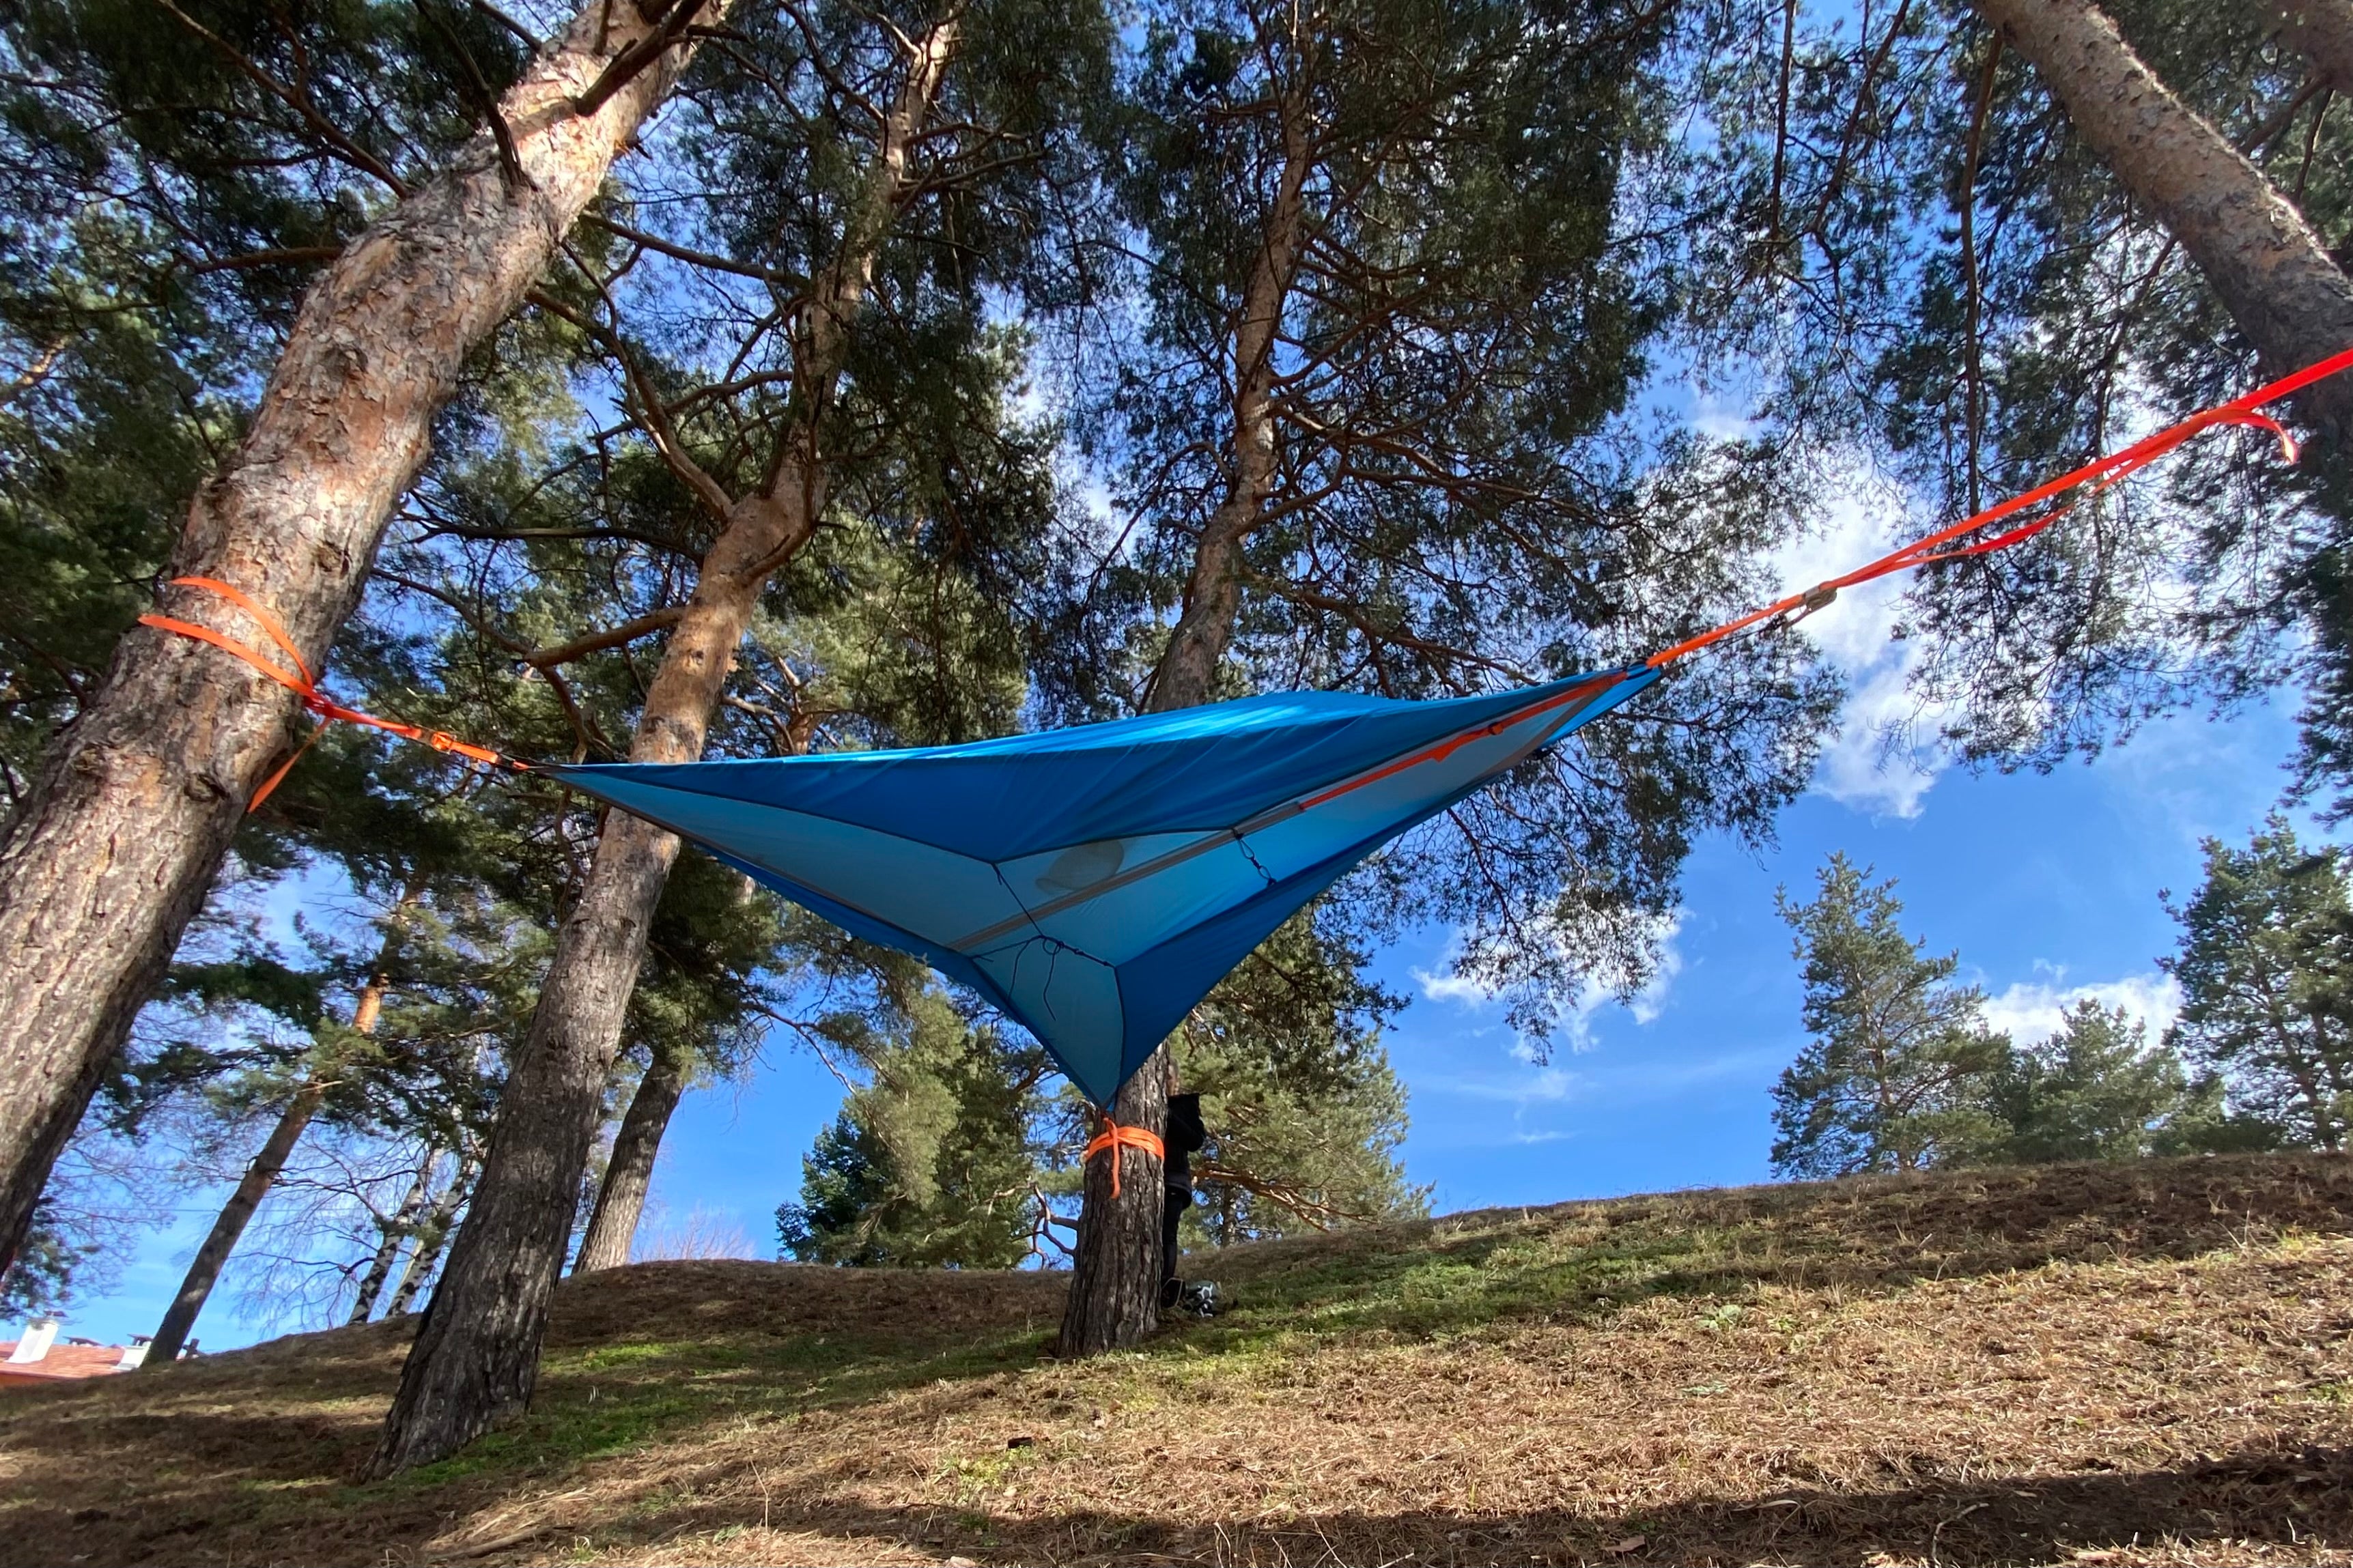 Sky - tree tent